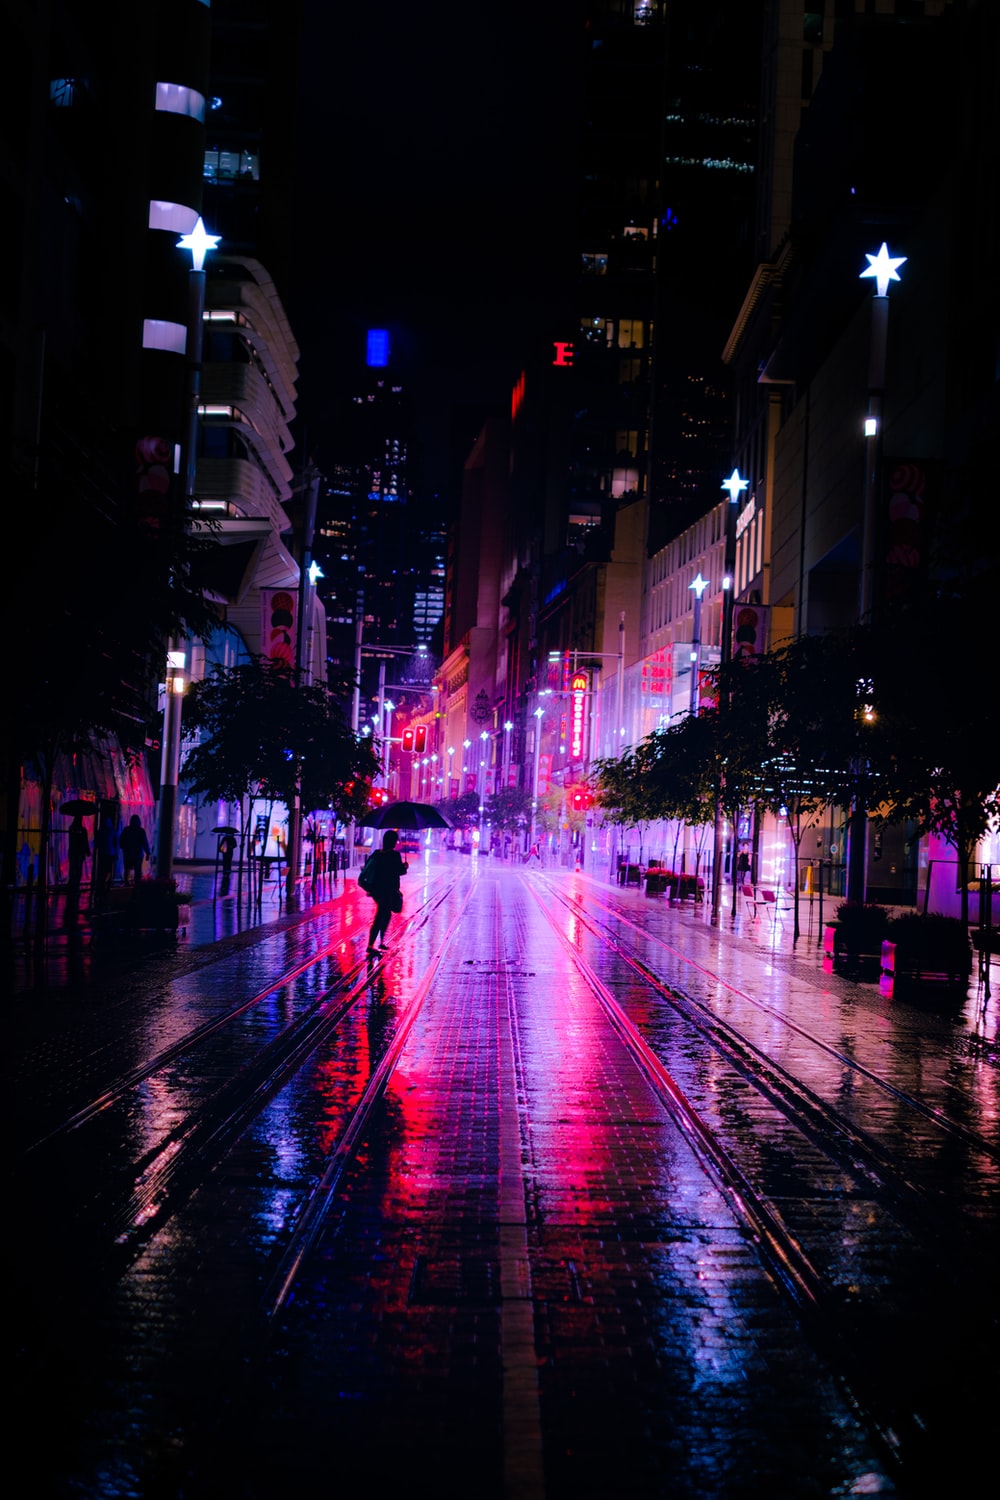 Urban Night Picture. Download Free Image